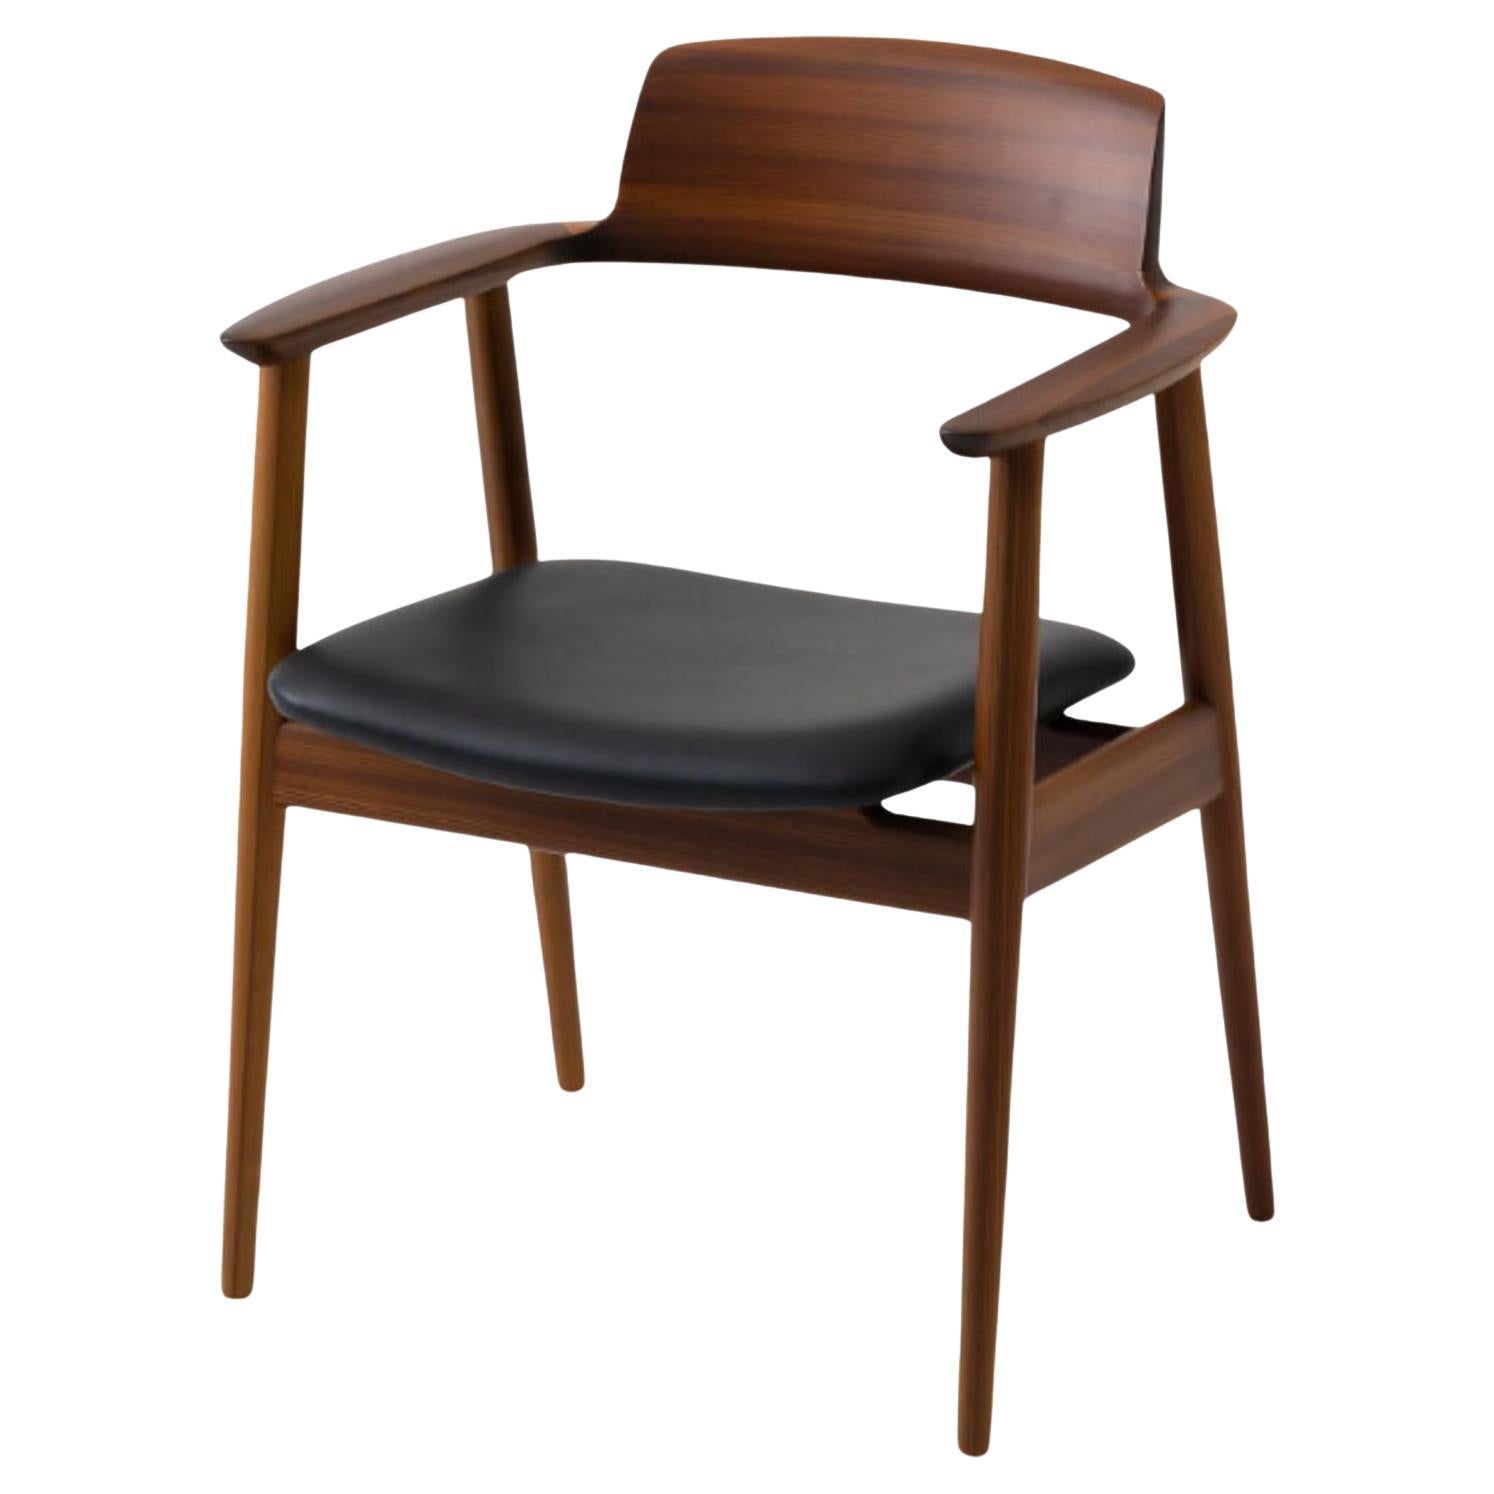 Kawakami 'Kisaragi' Model KJ200 Chair in Japanese Cedar and Upholstery for Hida